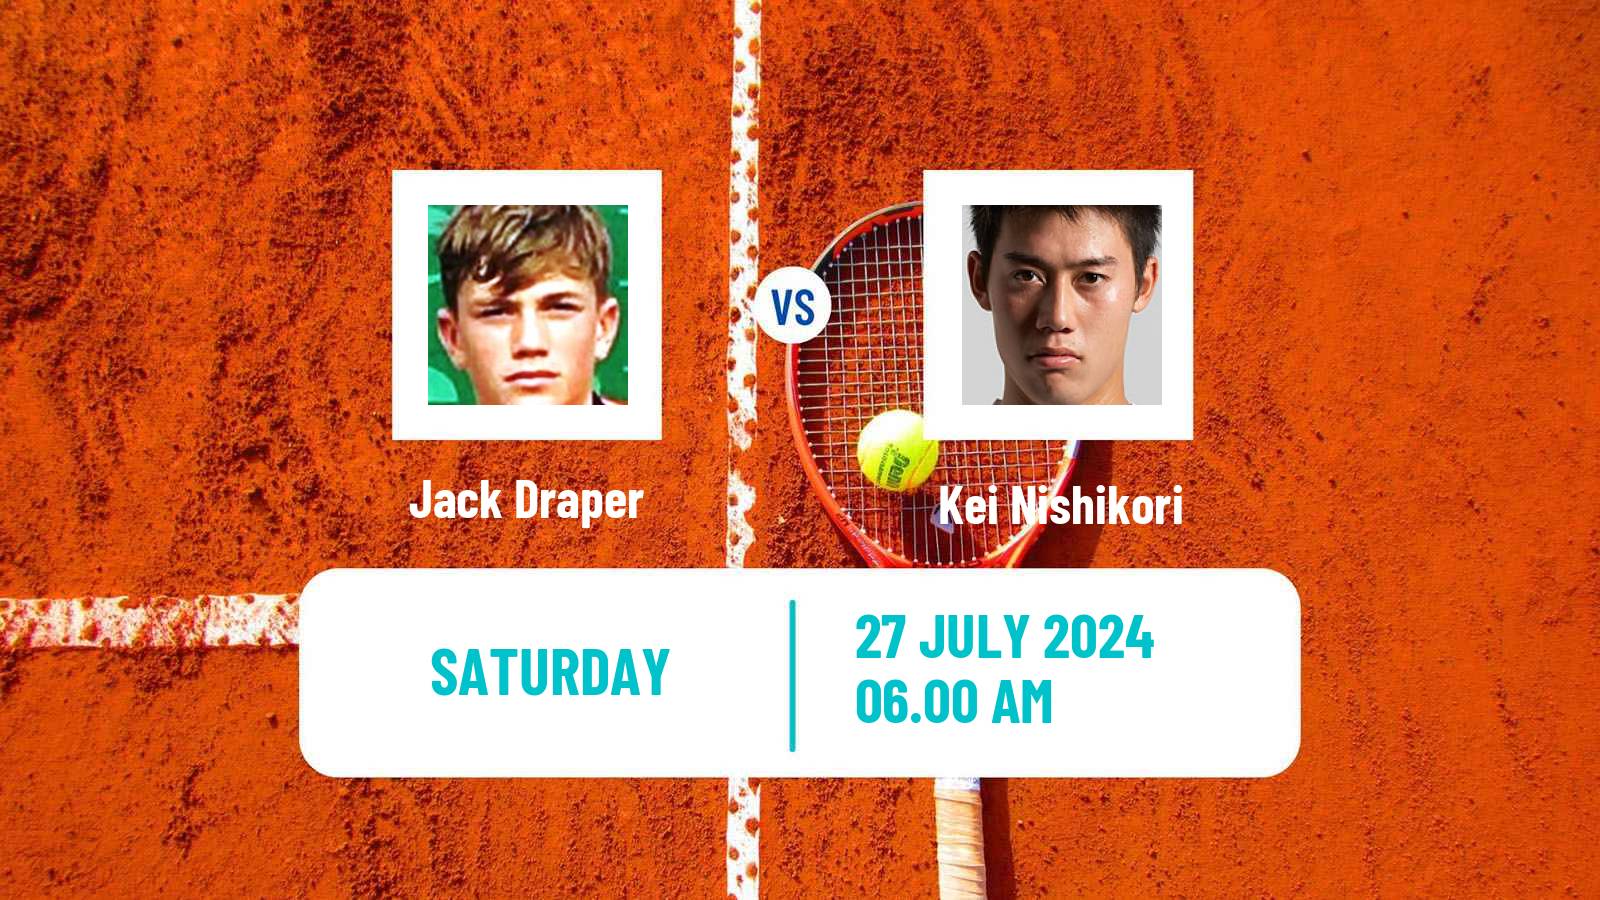 Tennis ATP Olympic Games Jack Draper - Kei Nishikori